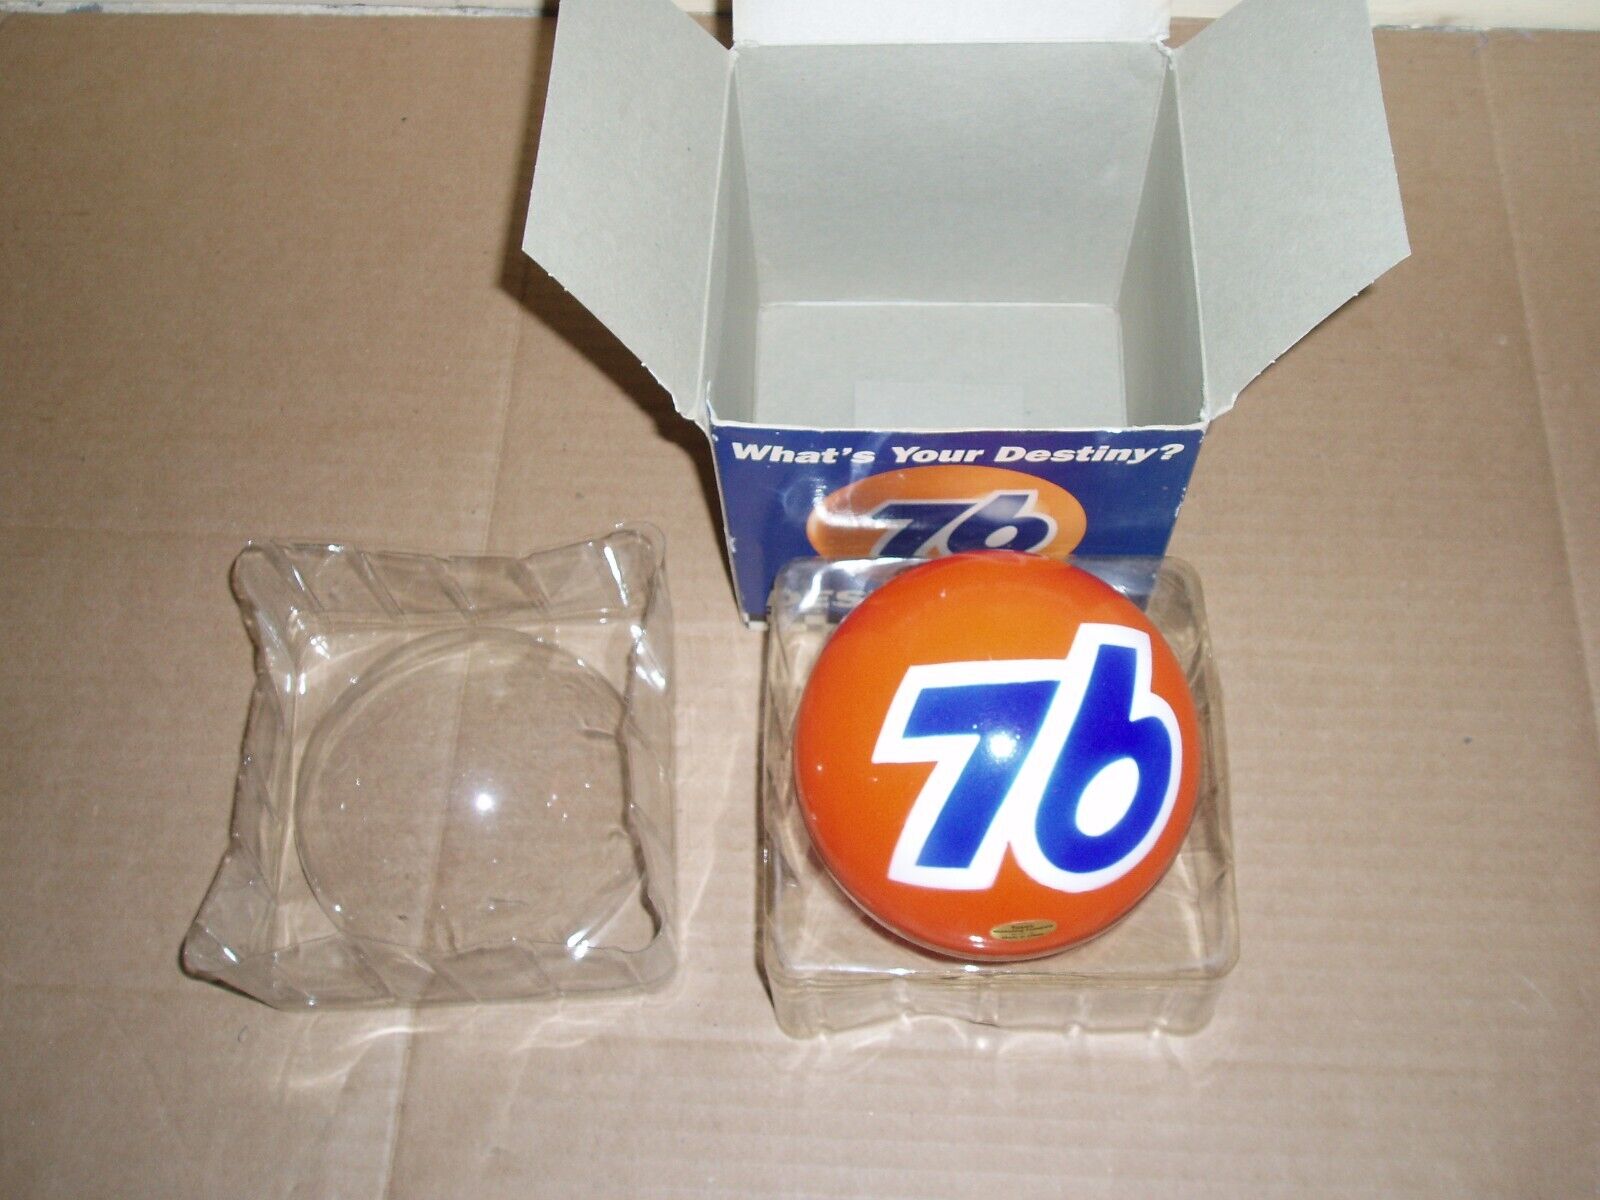 76 Destiny Ball Looks like Unocal 76 Ball Union 76 Ball Vintage Rare READ DESCR